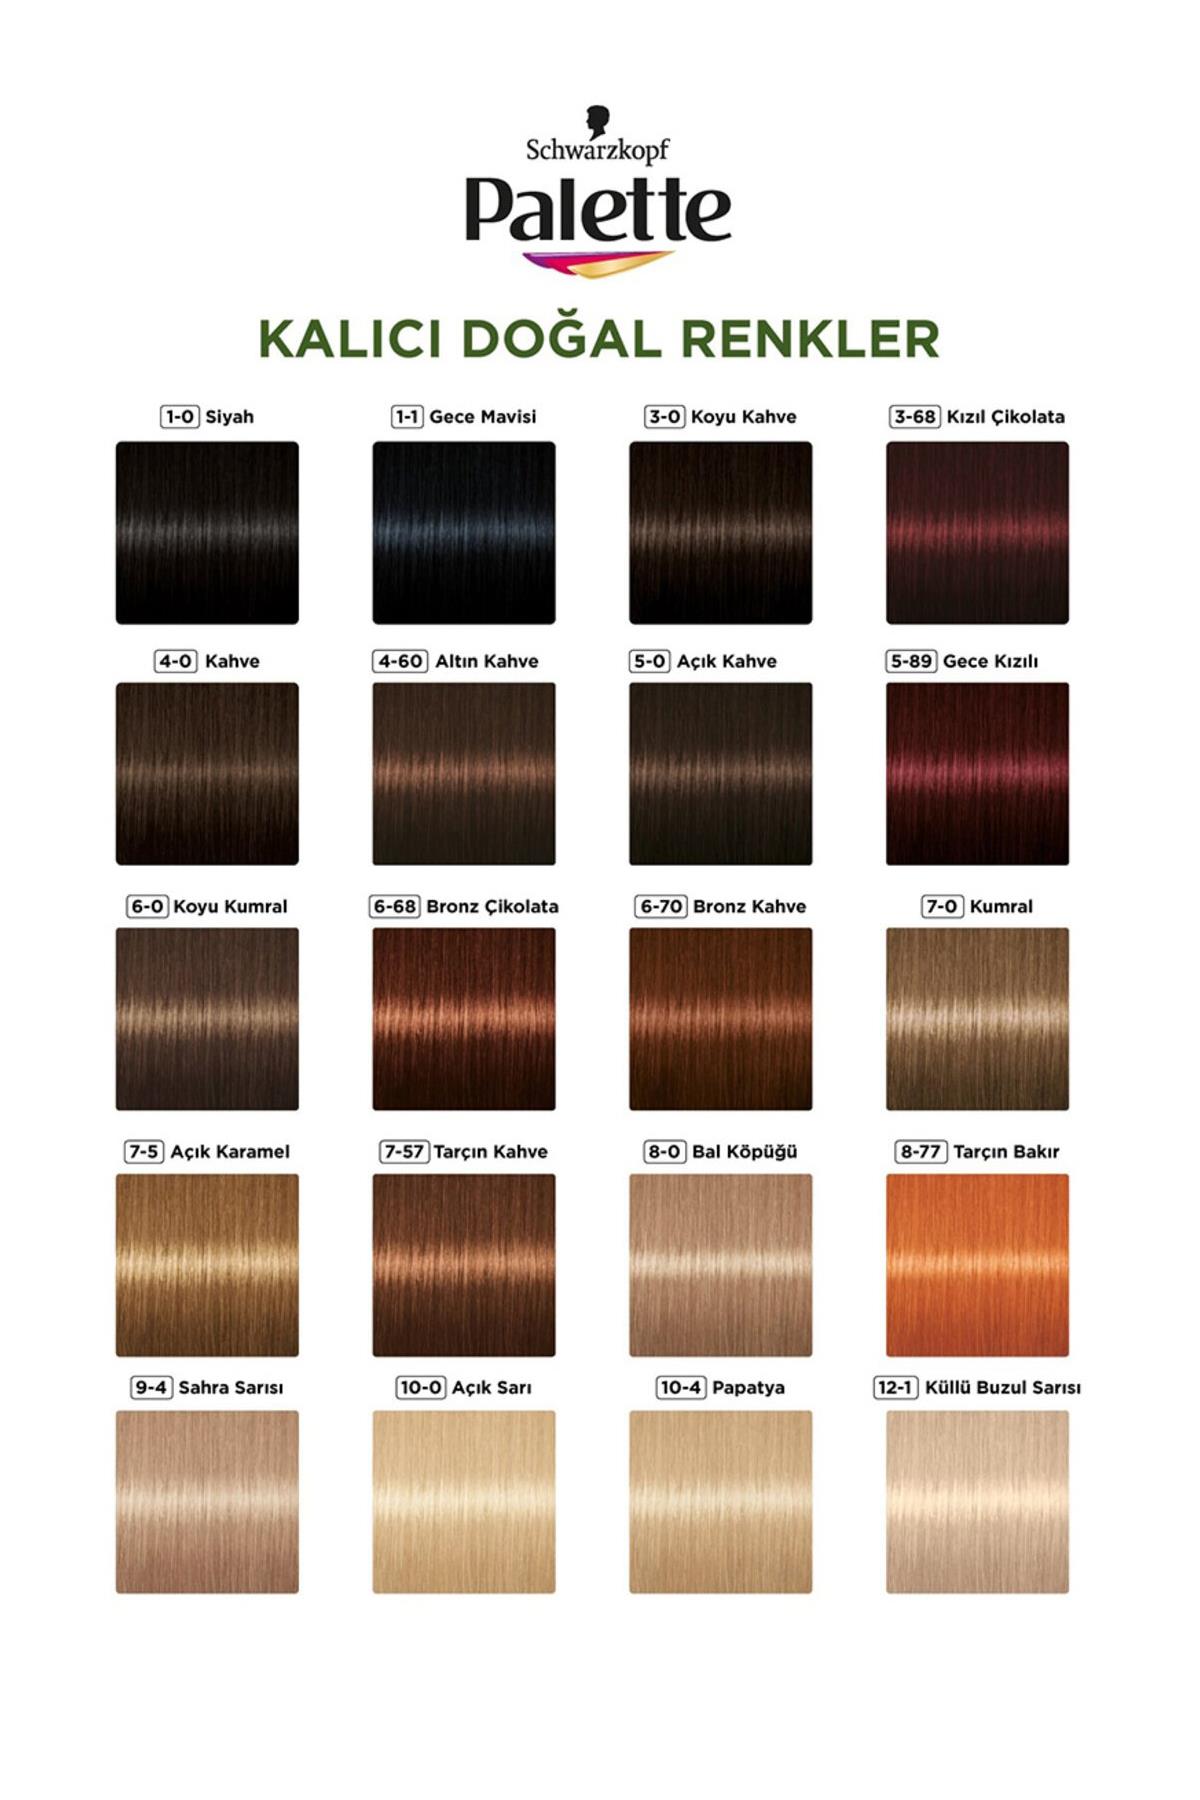 palette-kalici-dogal-renkler-sac-boyasi-no-9-7-dogal-acik-bakir-6559-2.jpg